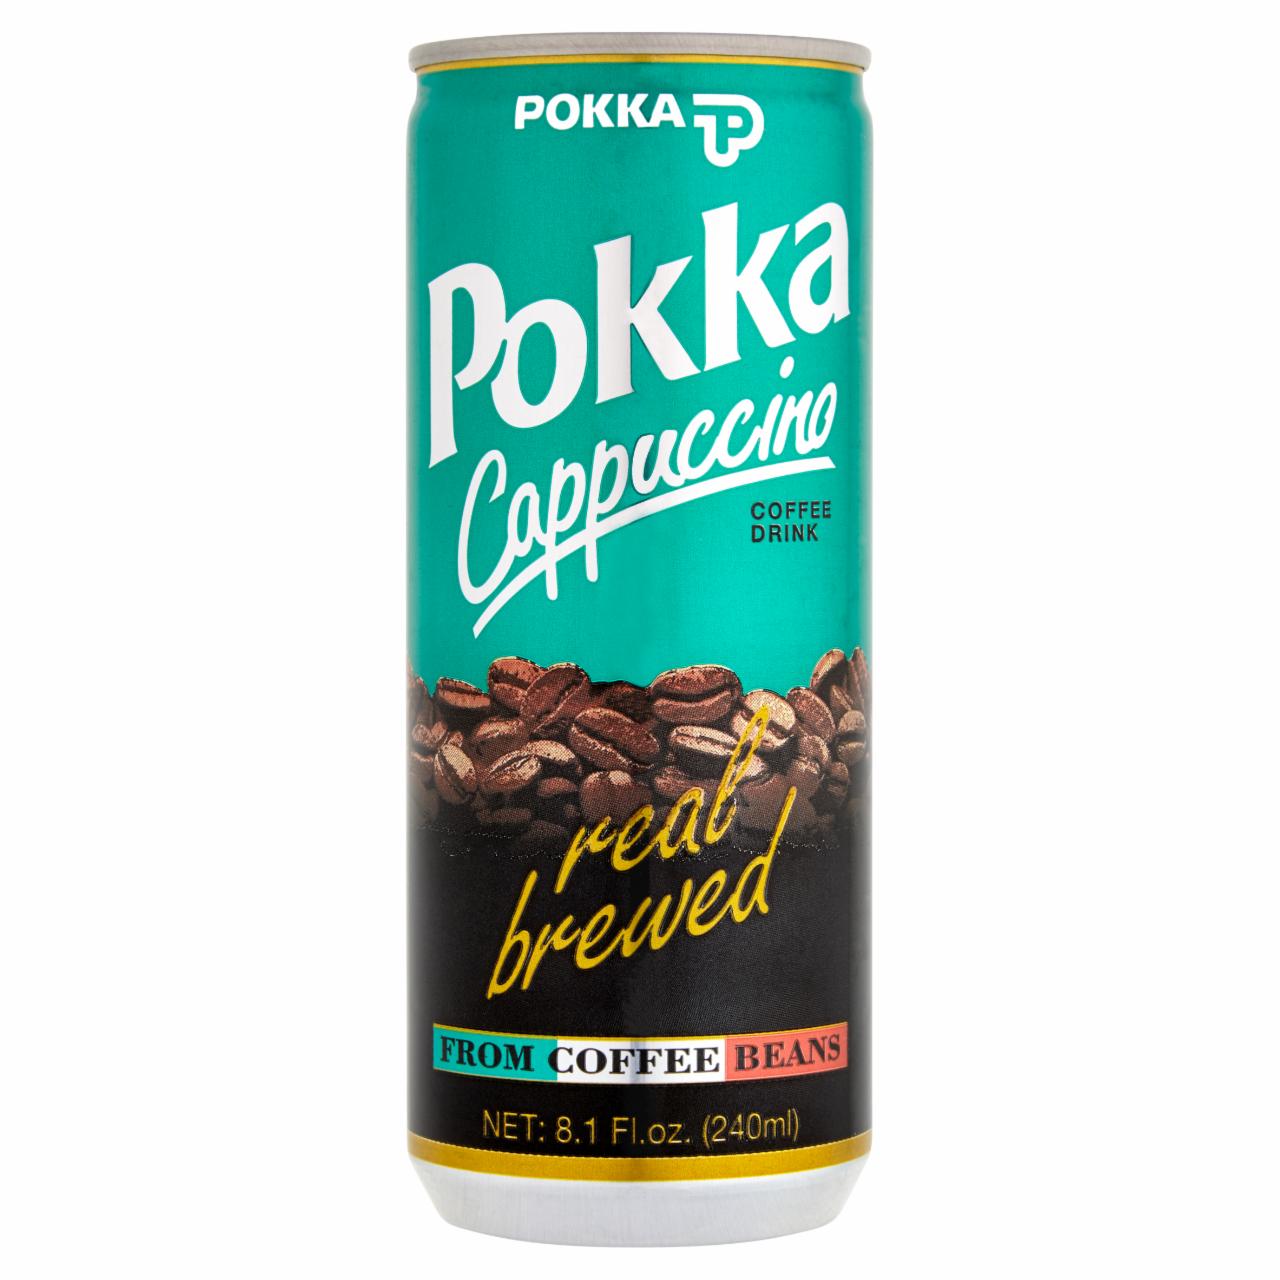 Képek - Pokka cappuccino 240 ml